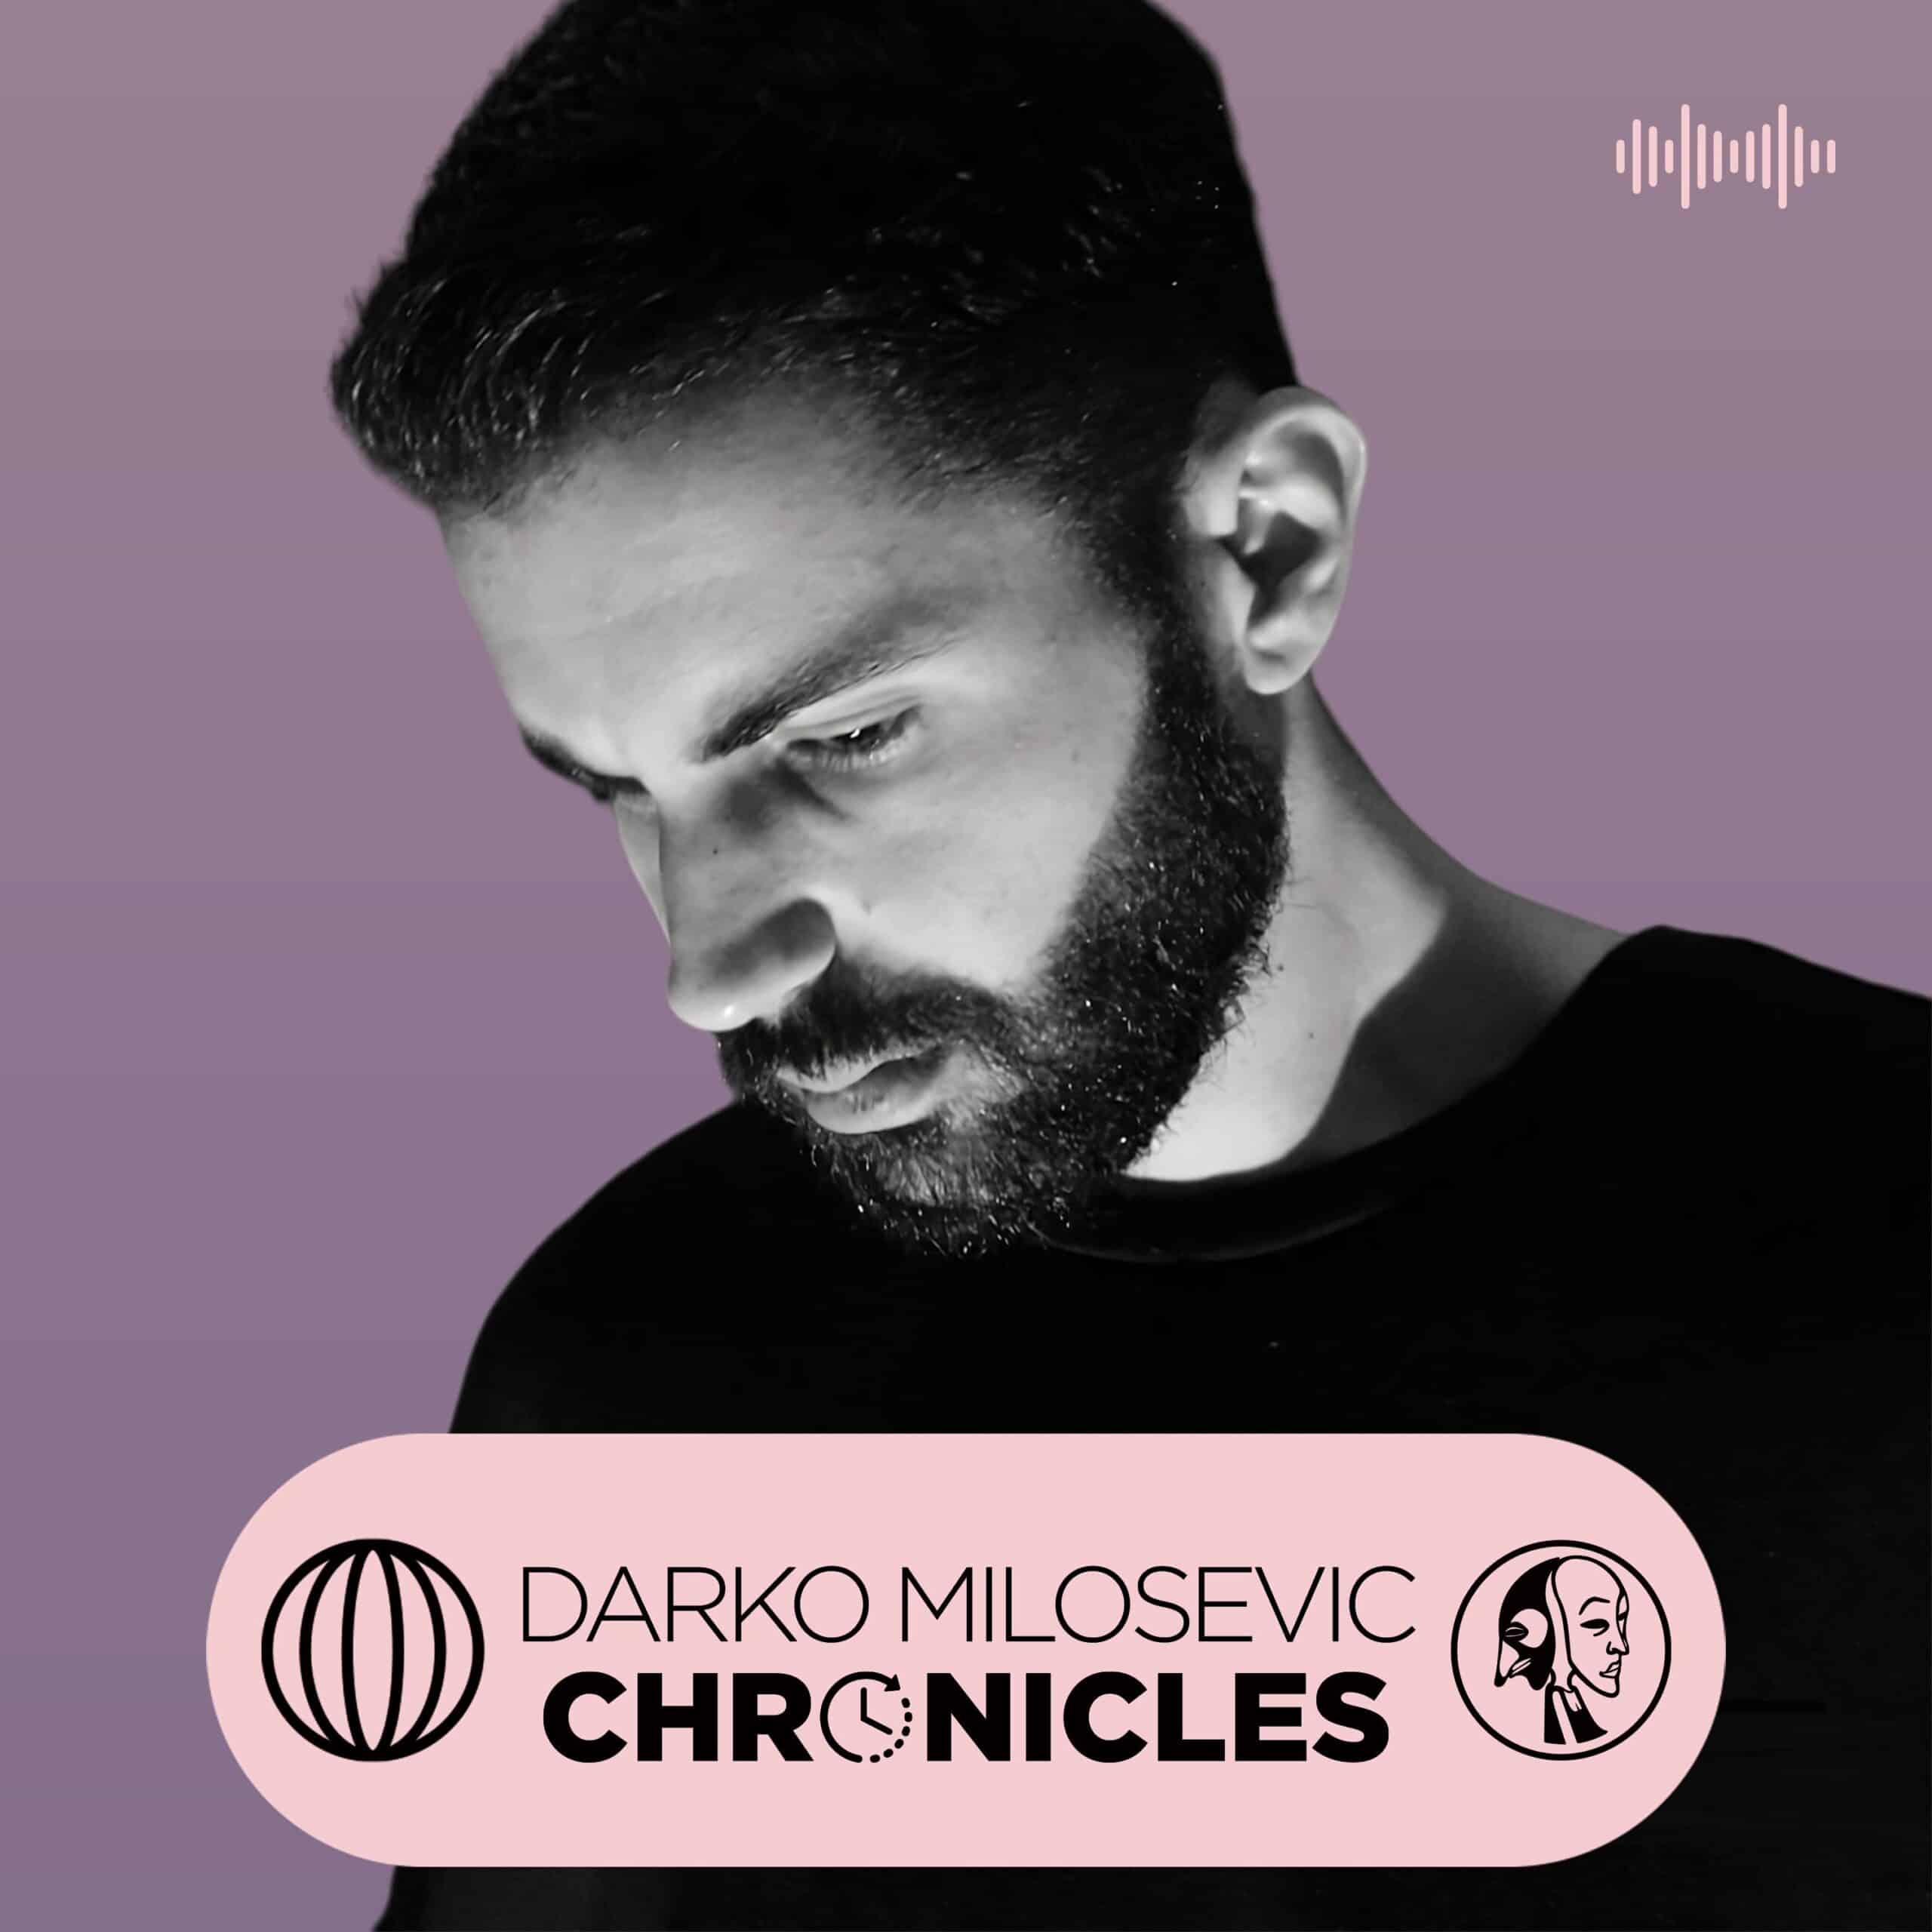 image cover: Darko Milosevic - Darko Milosevic Chronicles / Steyoyoke